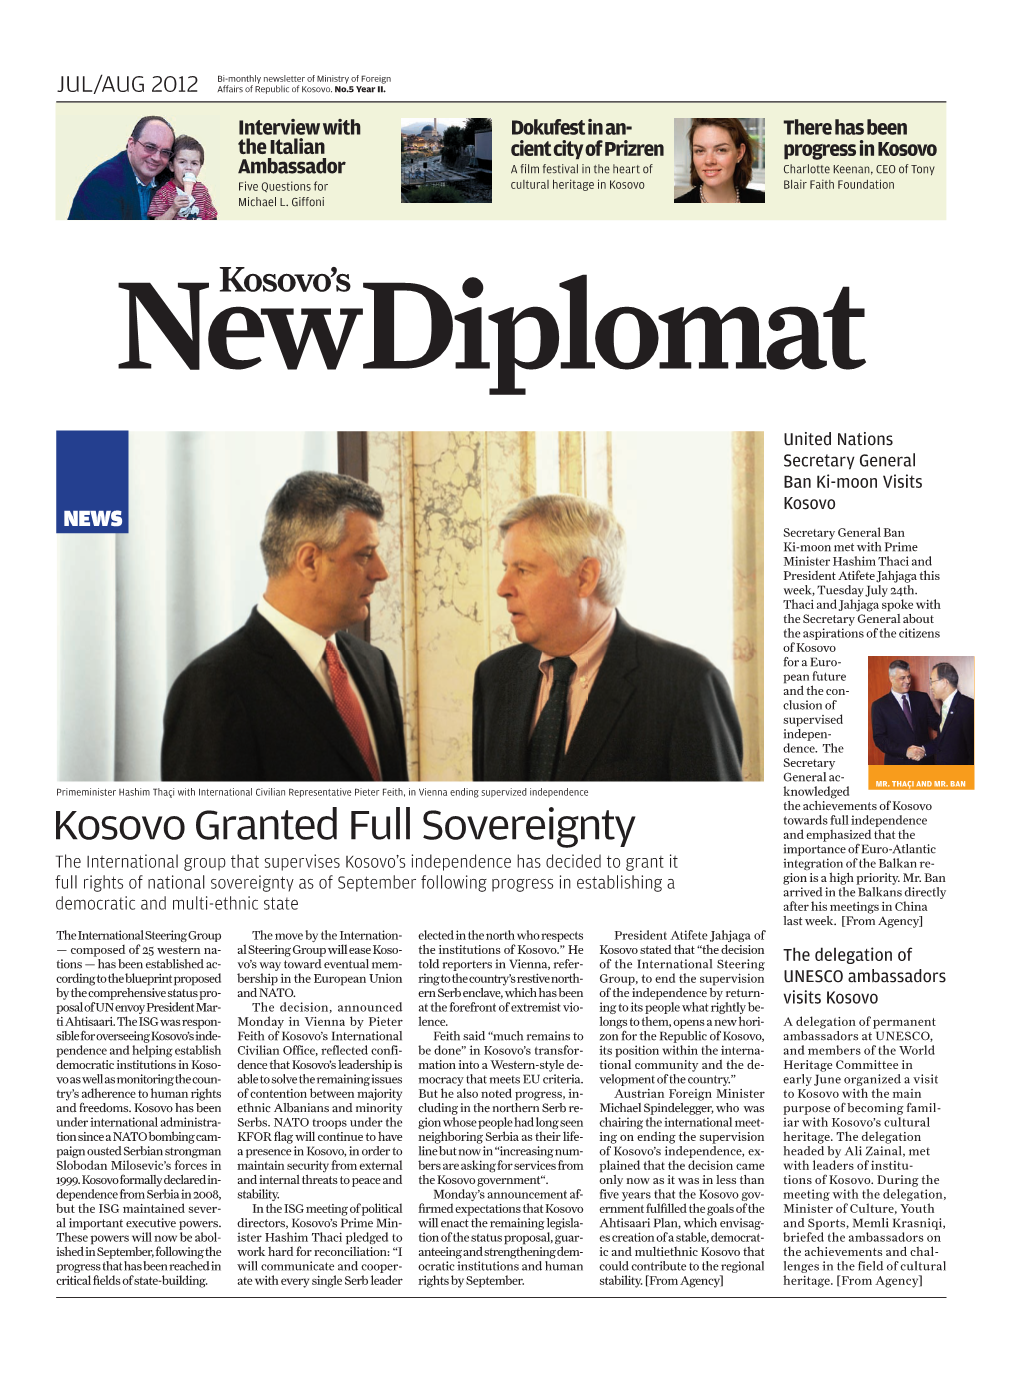 Kosovo Granted Full Sovereignty